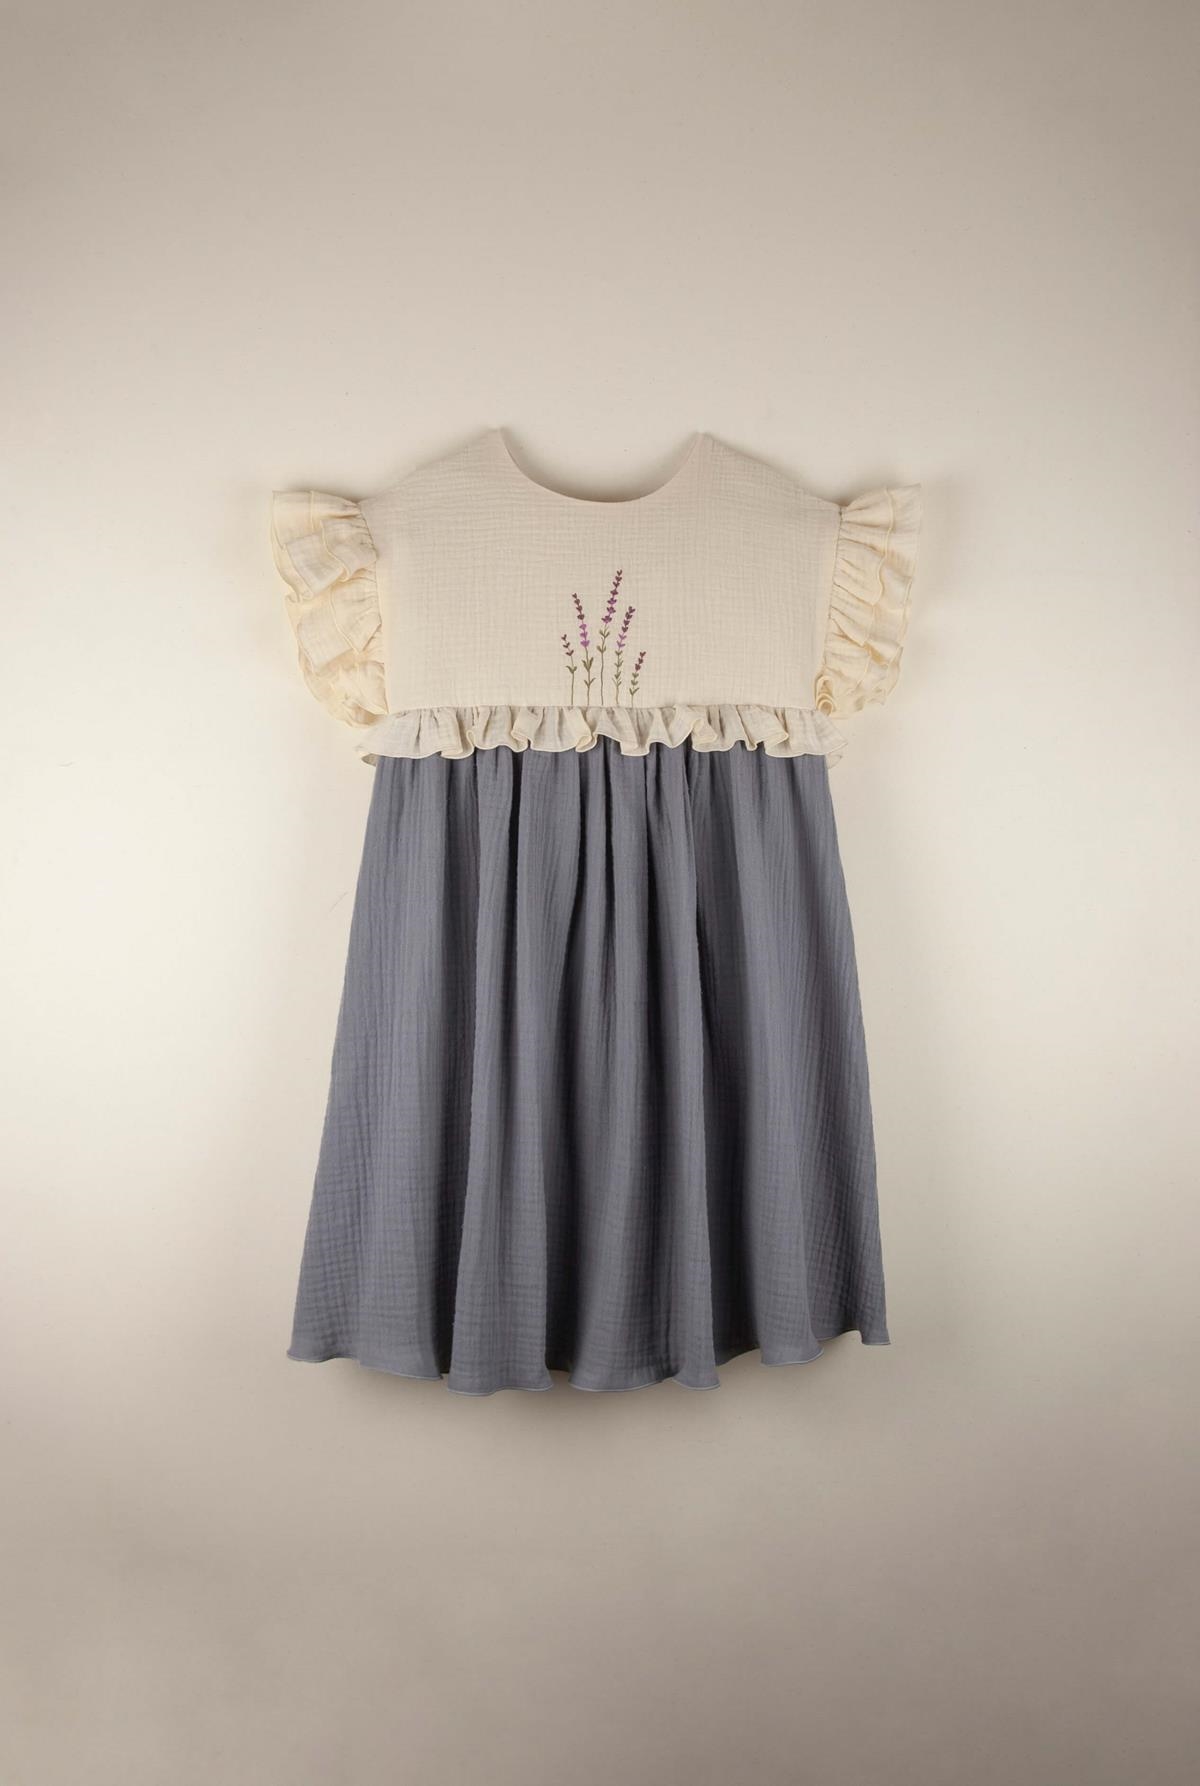 Mod.32.3 Greyish-blue organic dress with embroidered yoke | SS22 Mod.32.3 Greyish-blue organic dress with embroidered yoke | 1